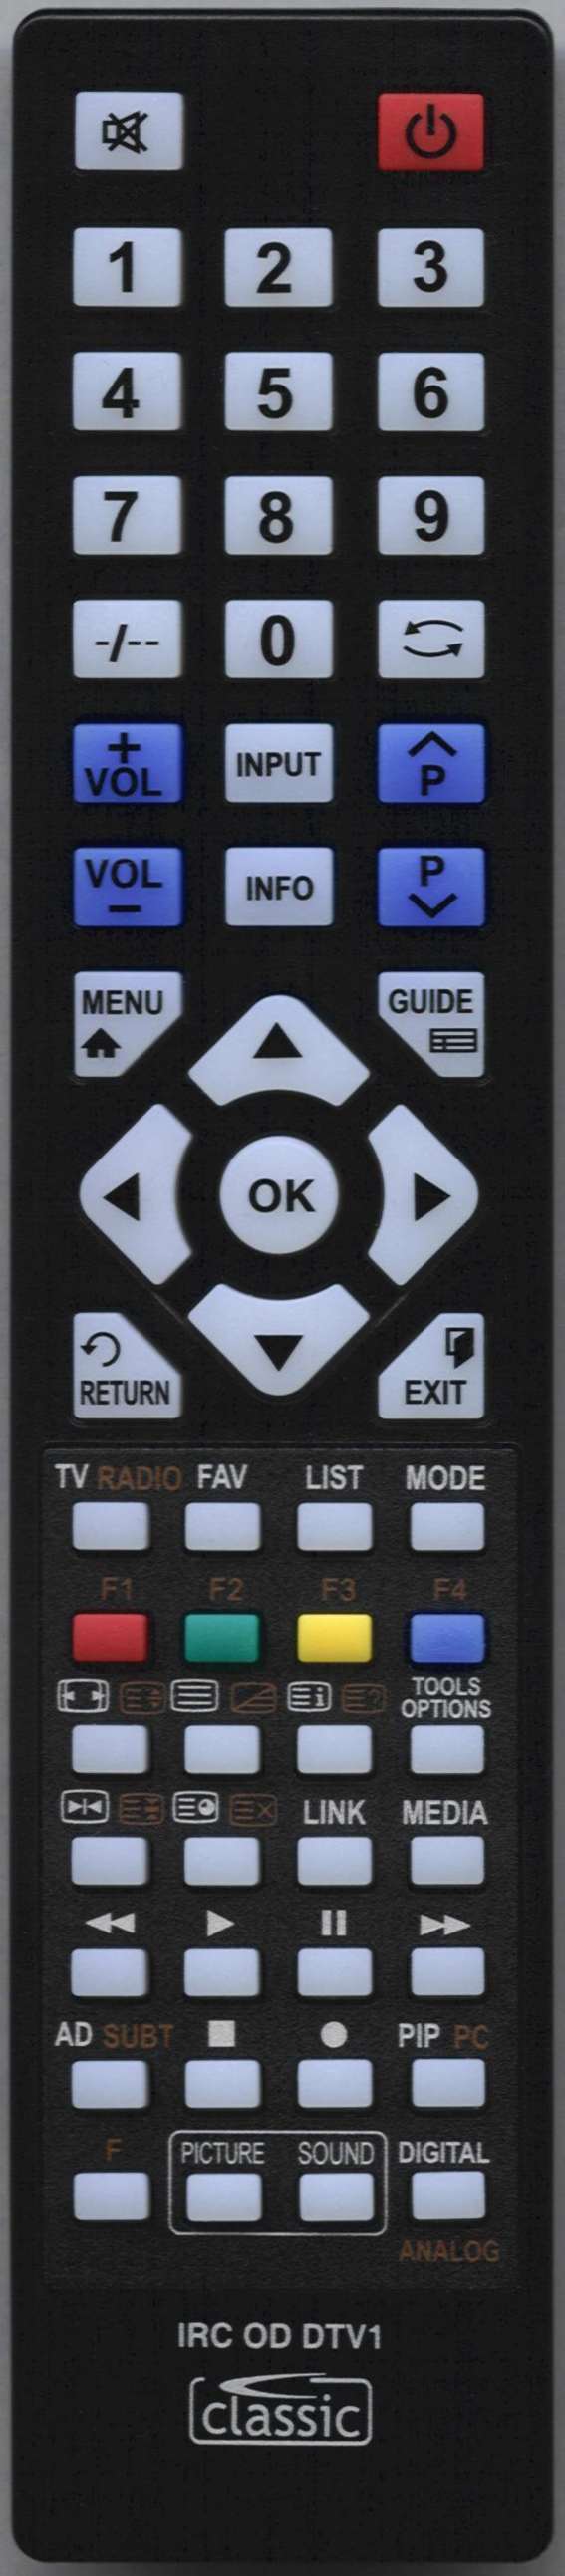 DIGITREX CFD2271H Remote Control